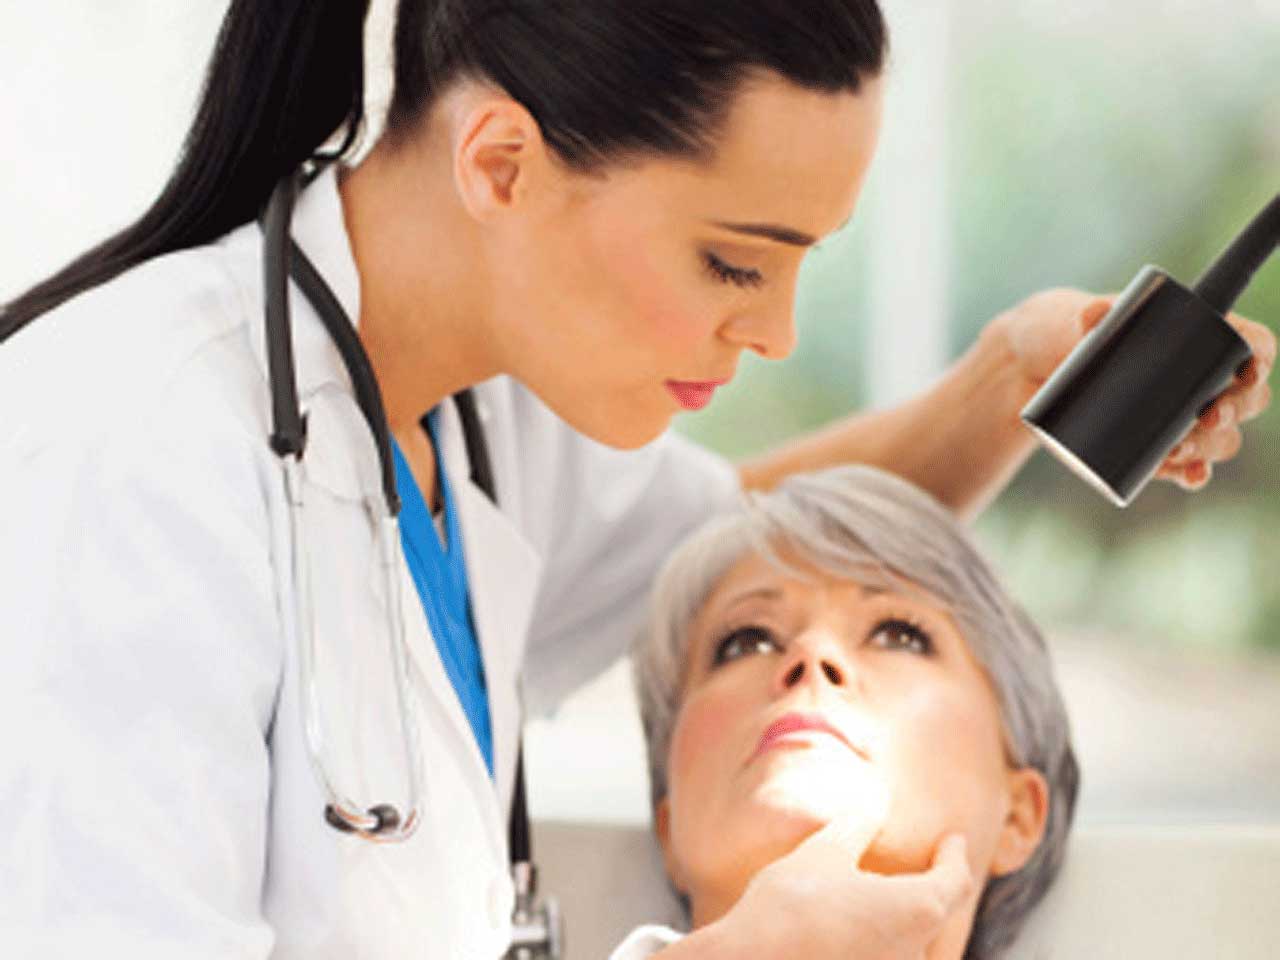 Dermatologist examining a female patient's skin